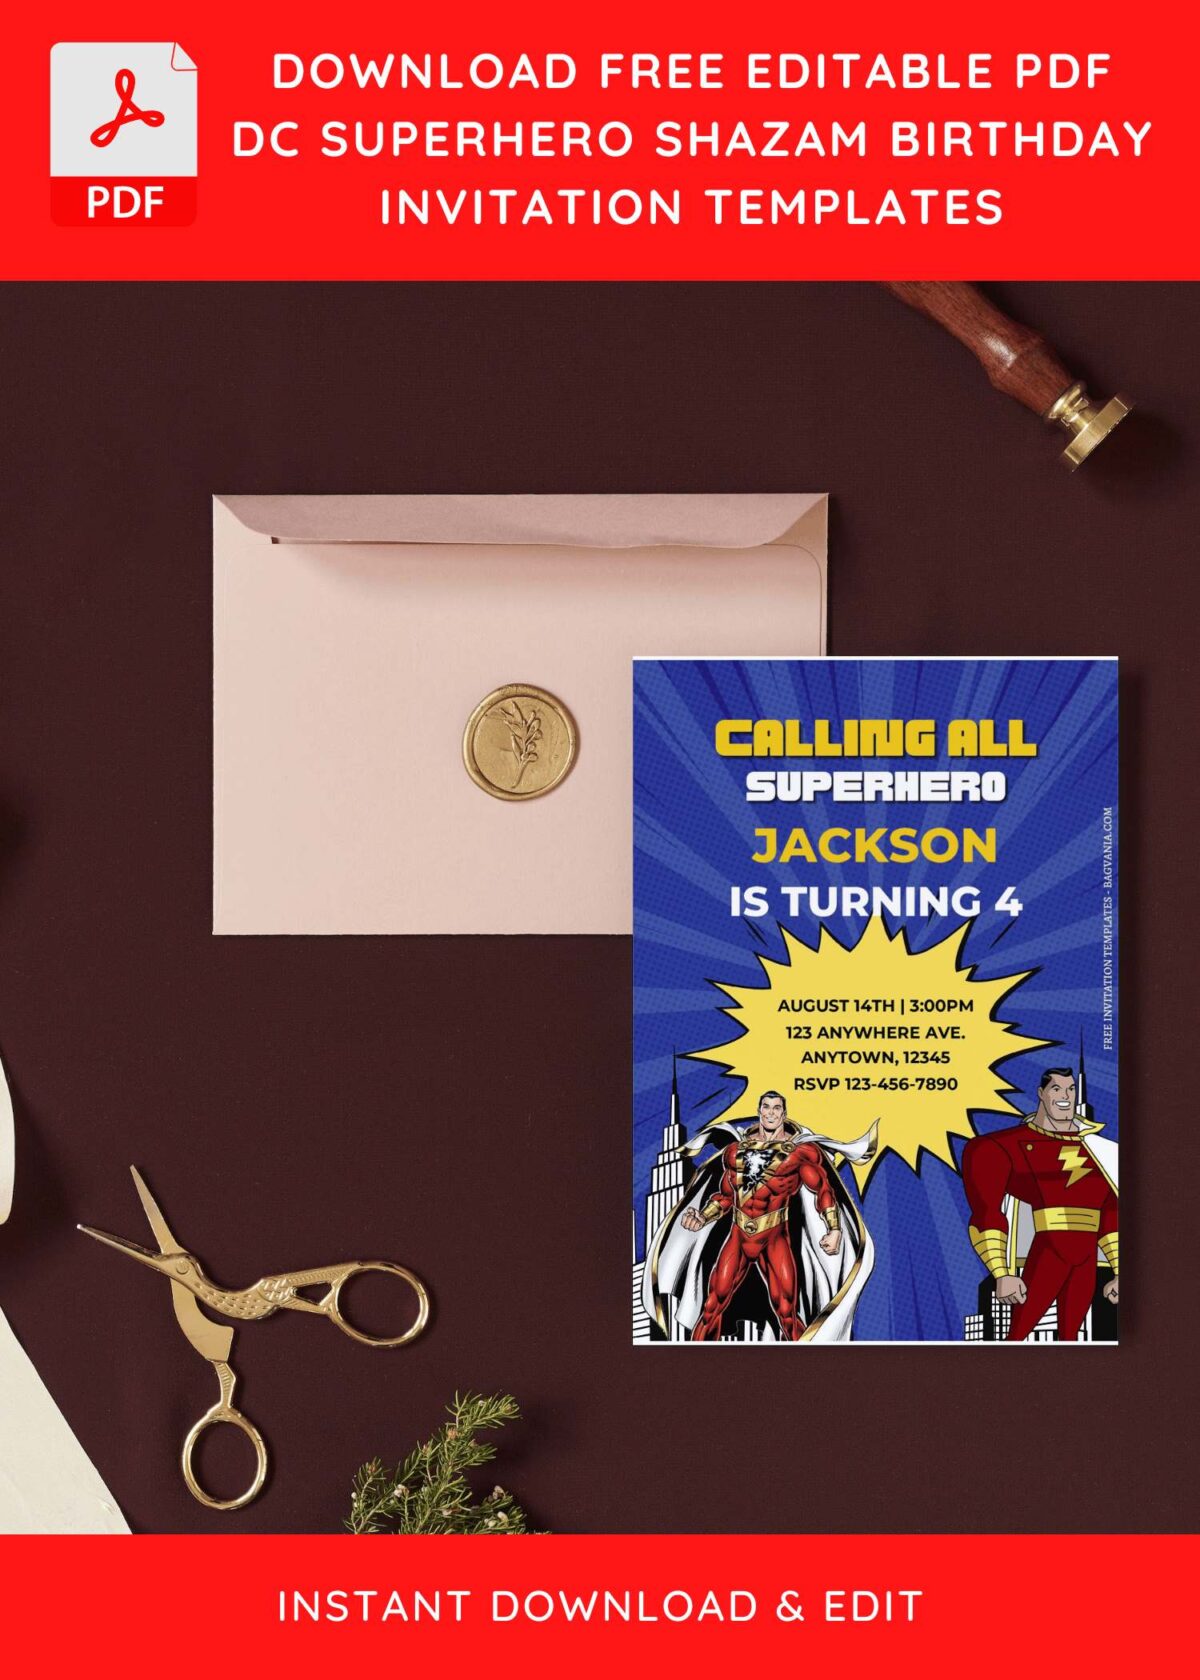 (Free Editable PDF) Unleash The Fun DC Shazam Birthday Invitation Templates I